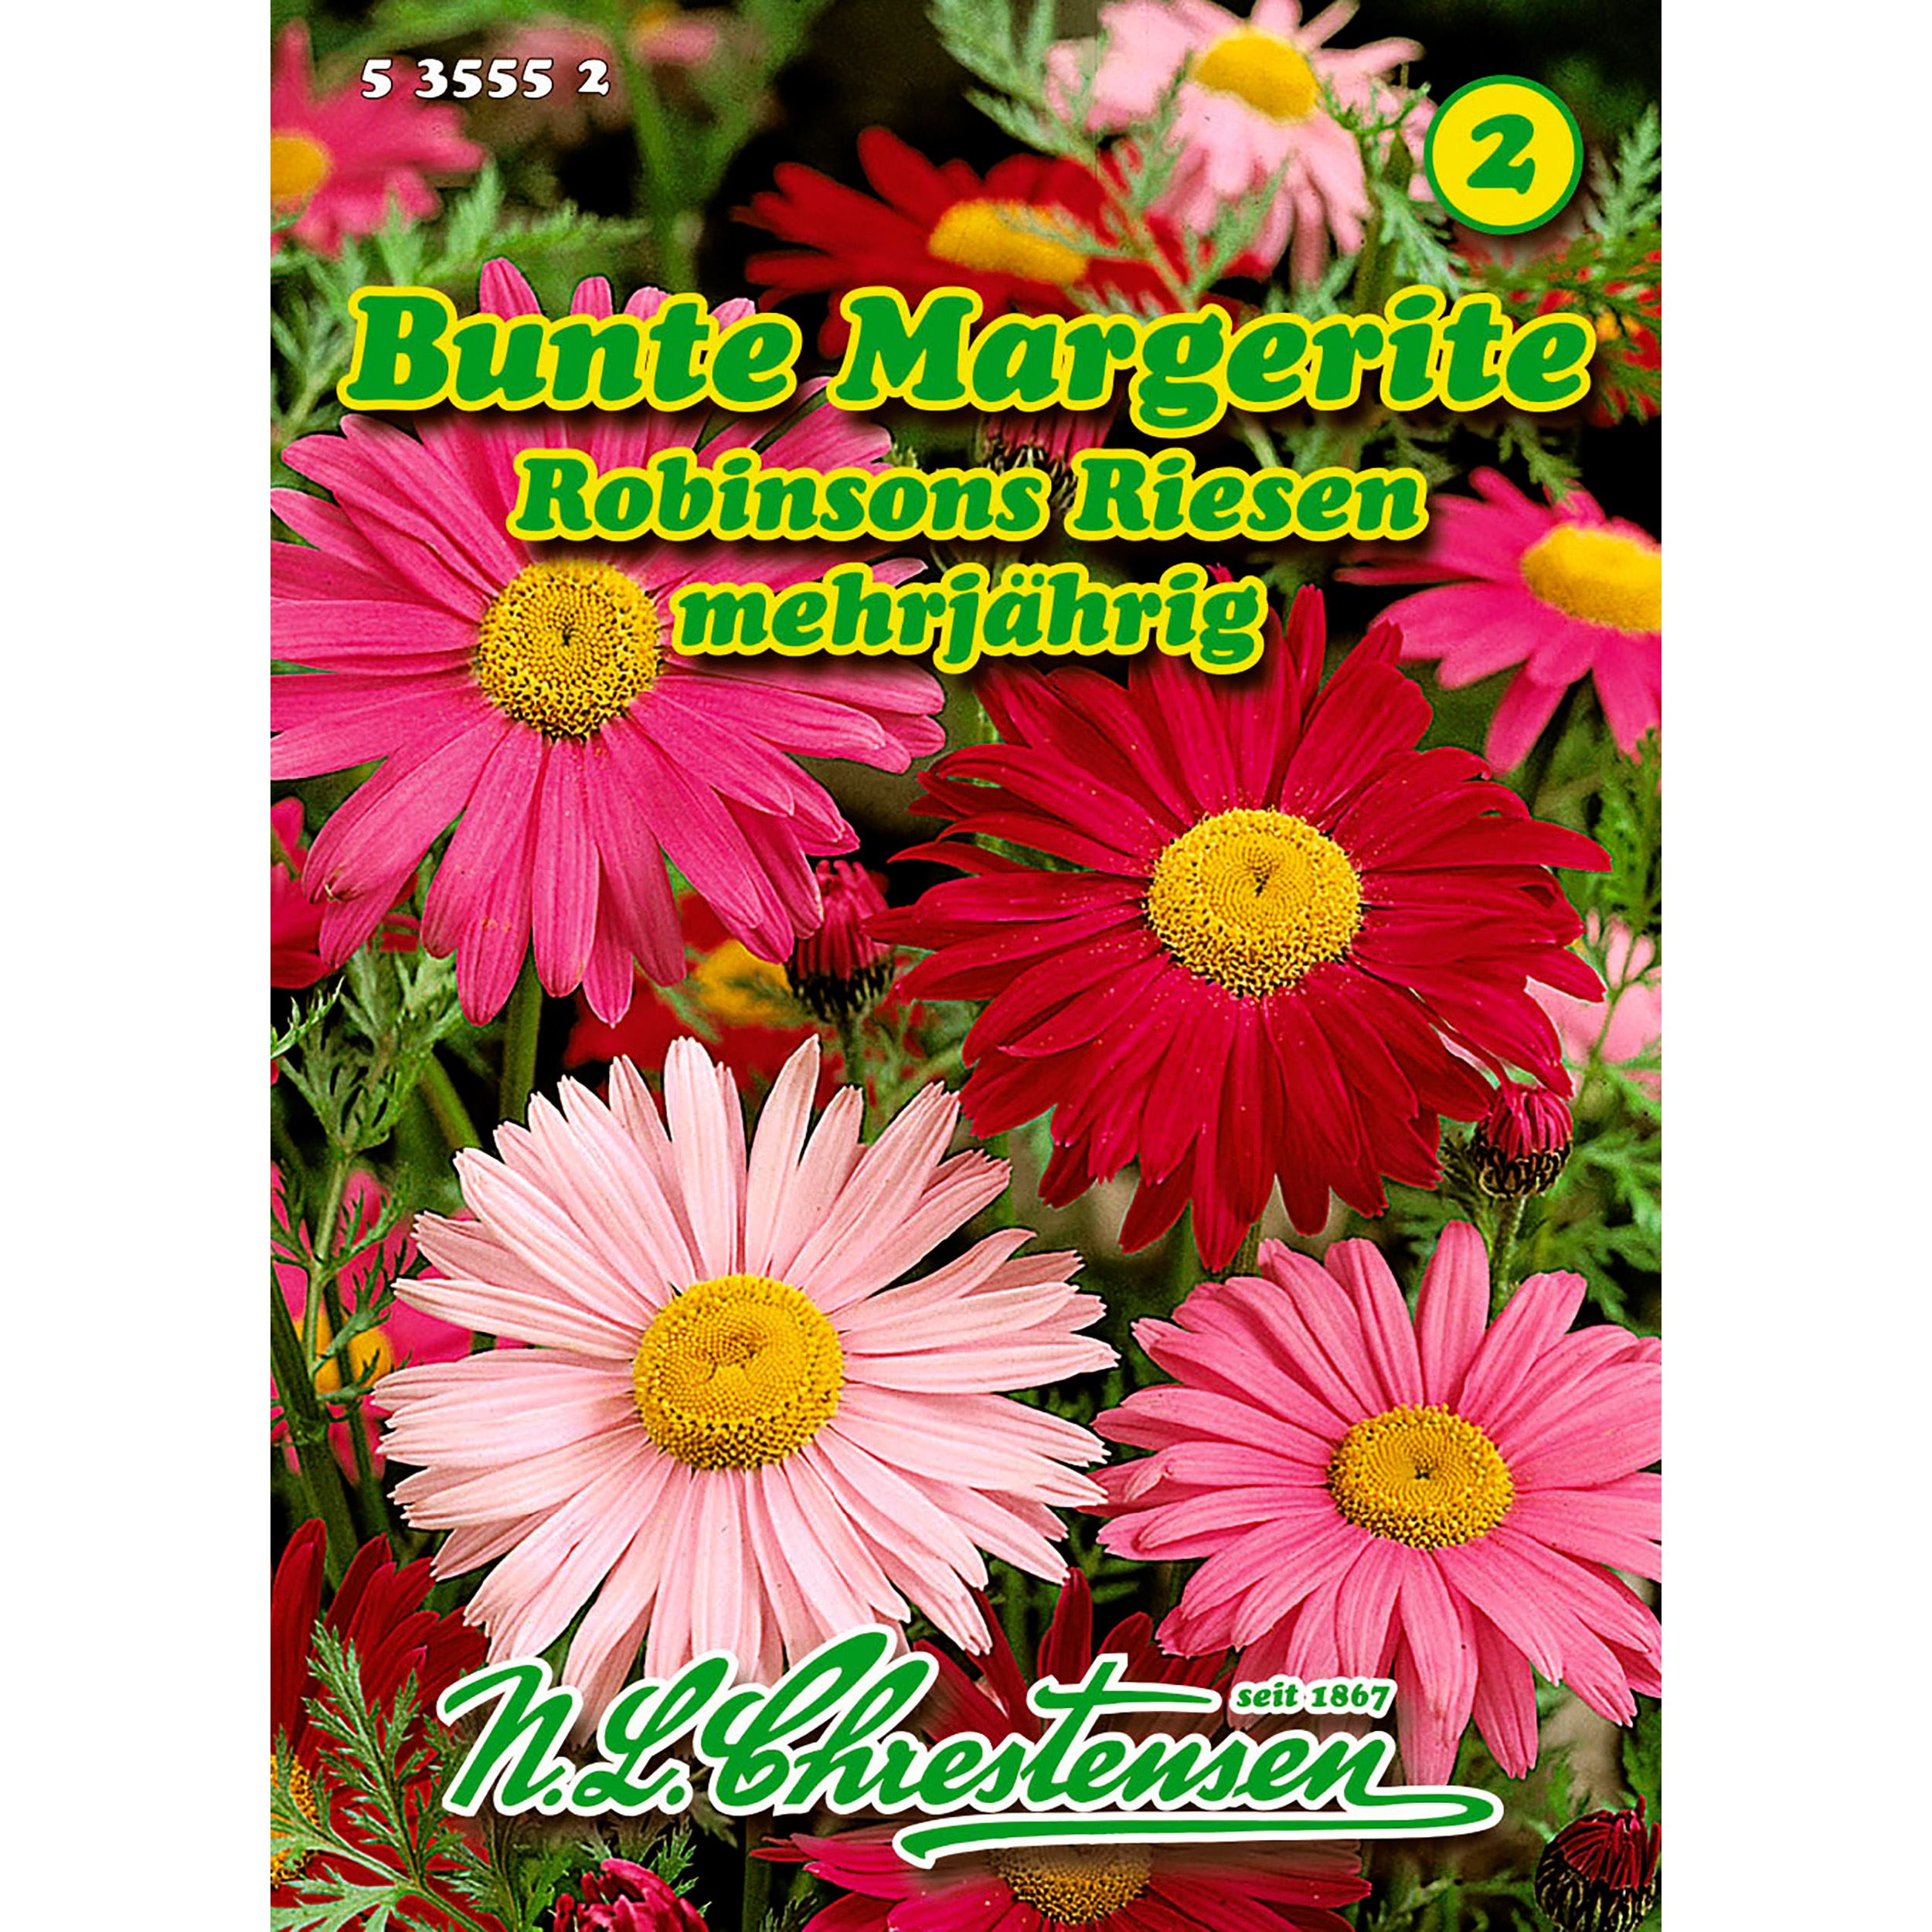 Chrysanthemum coccinea, Bunte Margerite, Robinsons Riesen